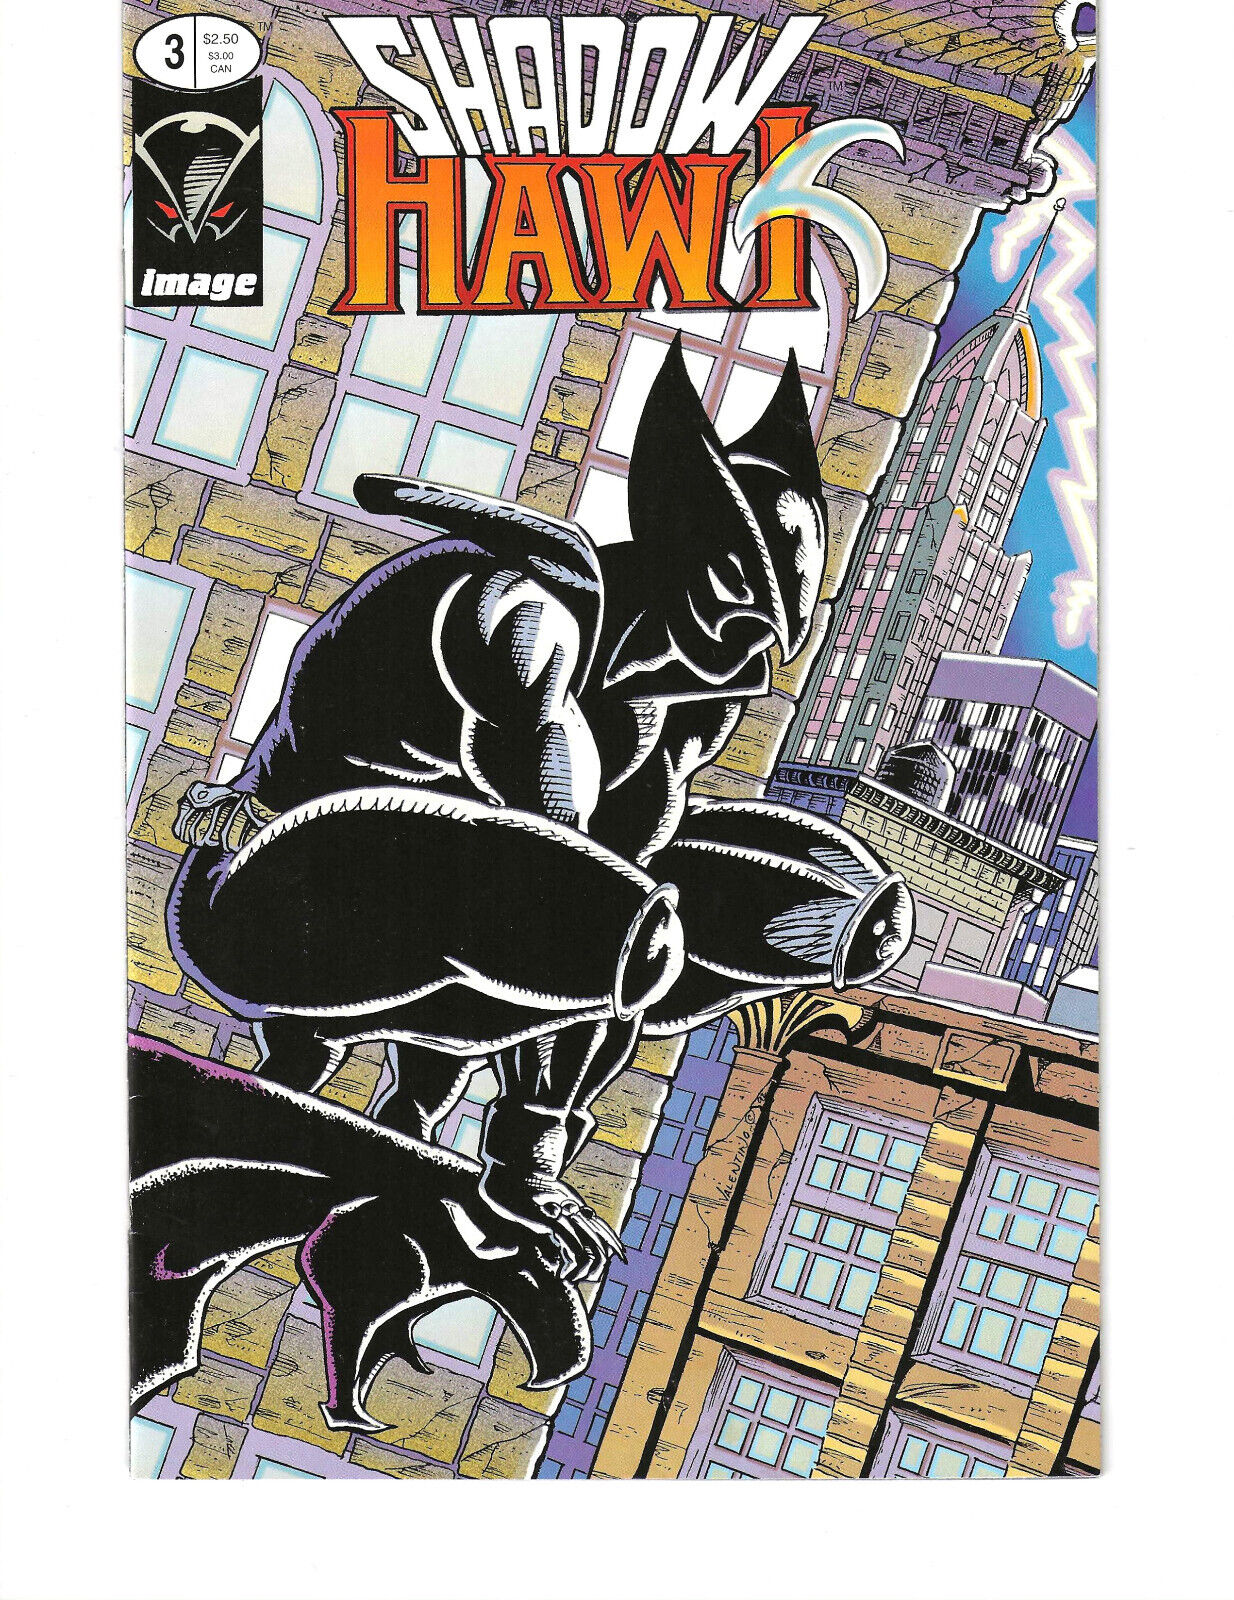 Shadow Hawk #3 Image Comics 1992 Glow in the Dark Cover